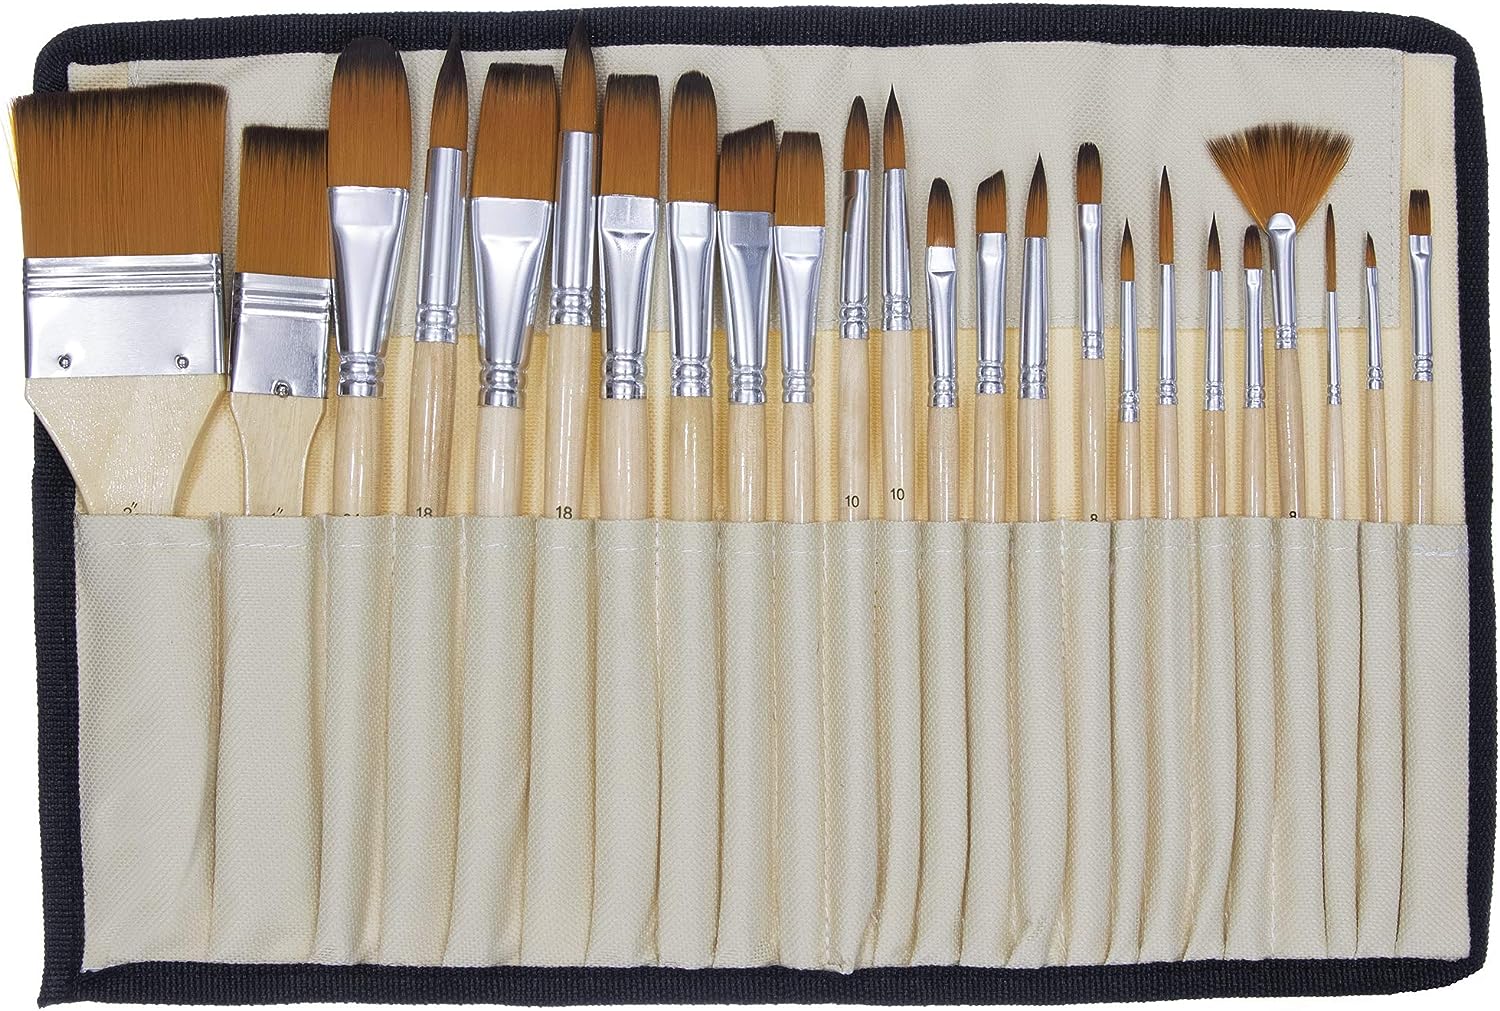 Jerry Q Art 24 Pcs Artist Paint Brush Set with Free [...]